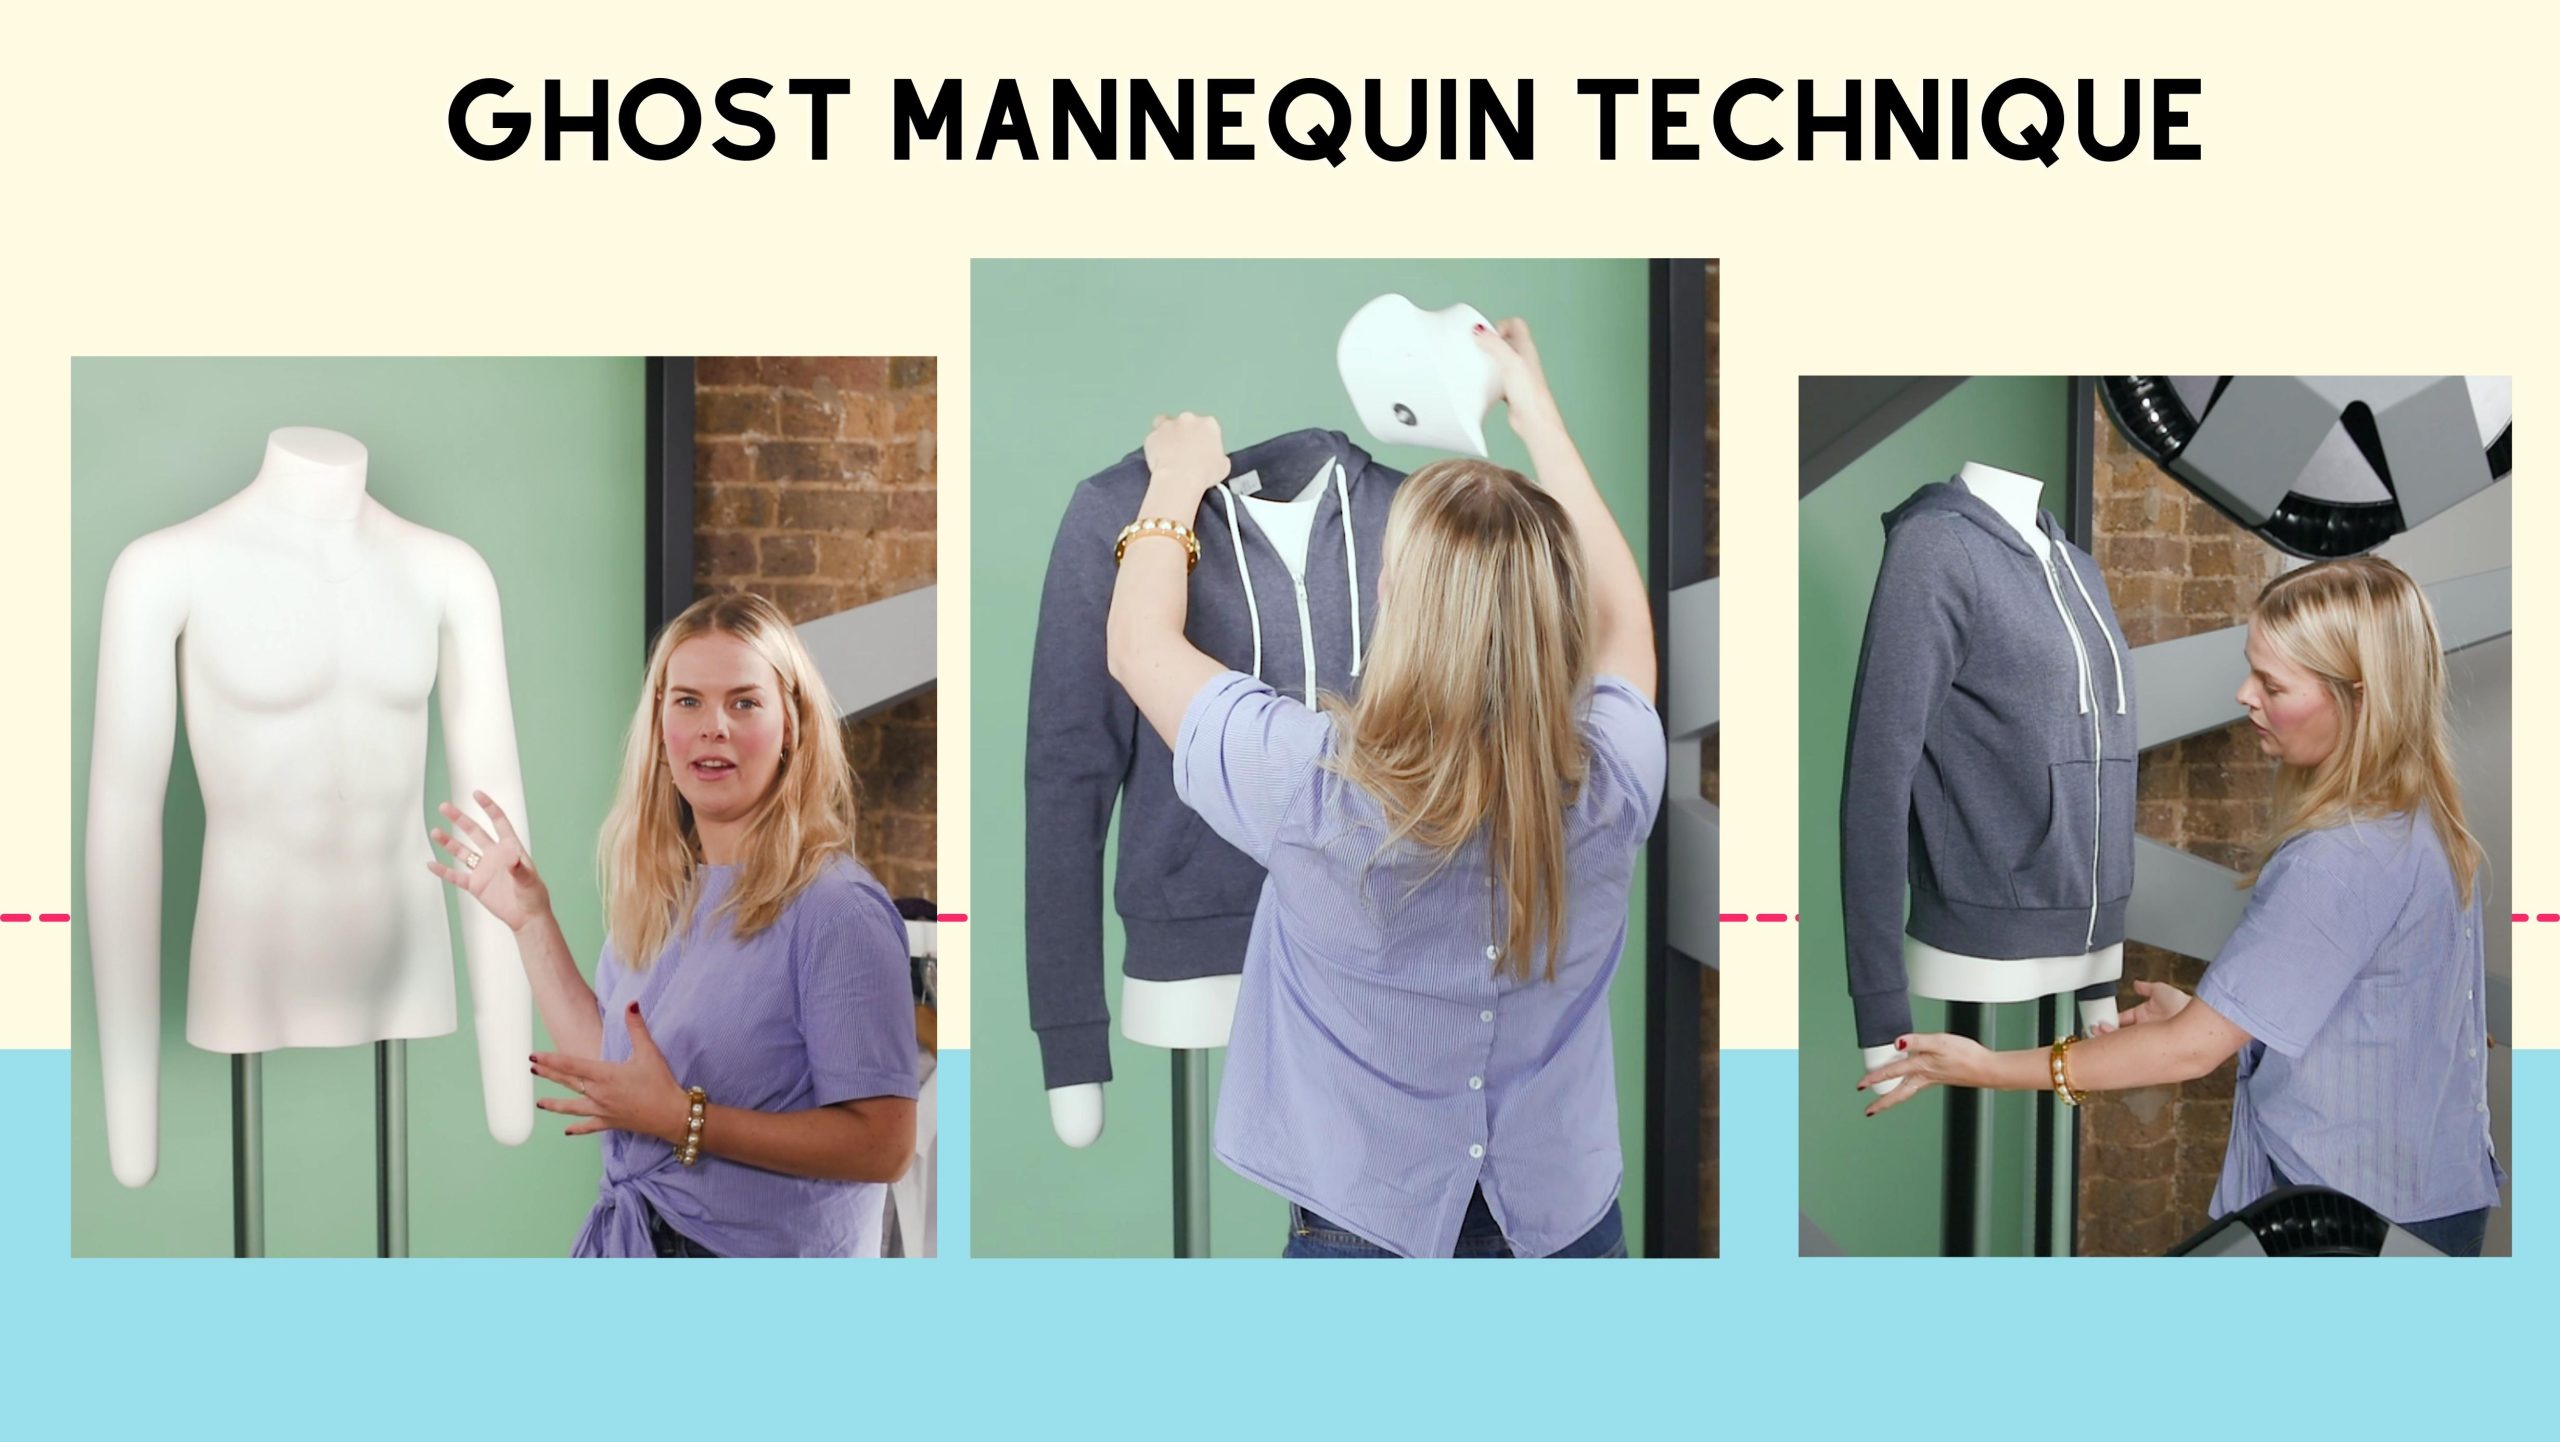 Ghost mannequin technique